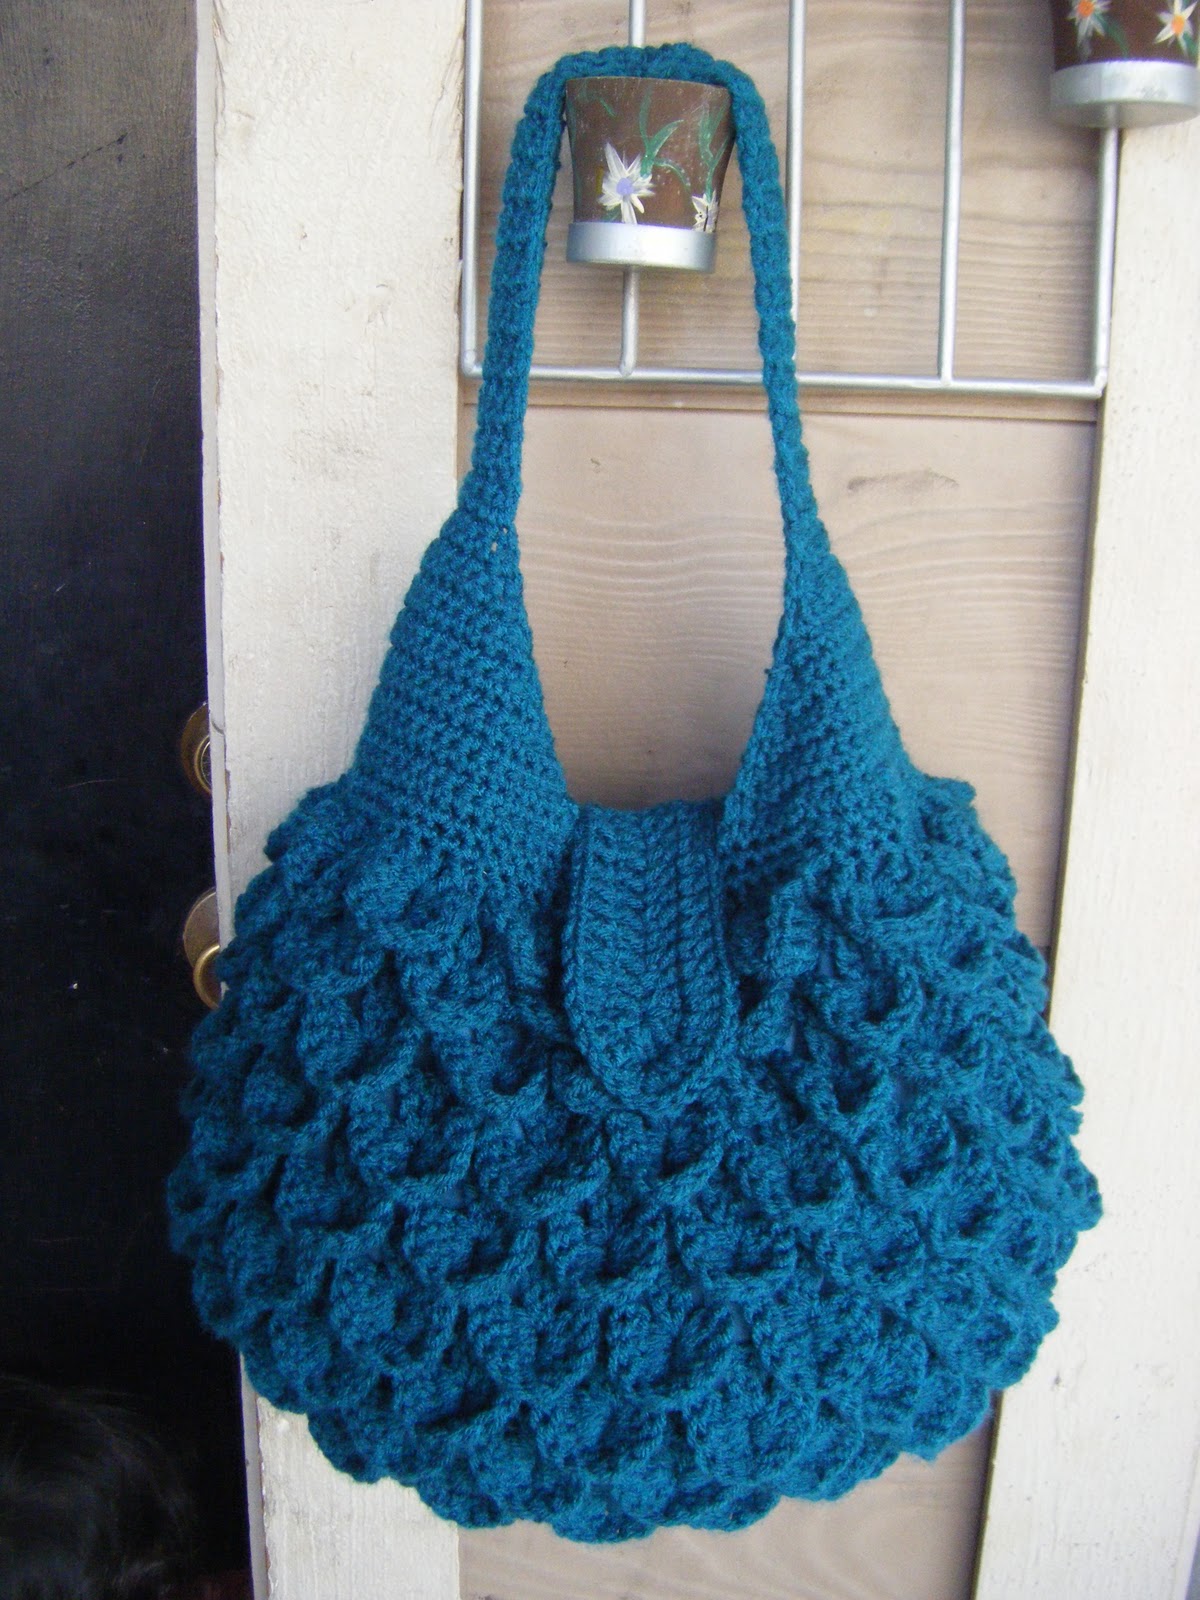 Crocheted Purse - Free Crochet Pattern - Crafts: free
, easy